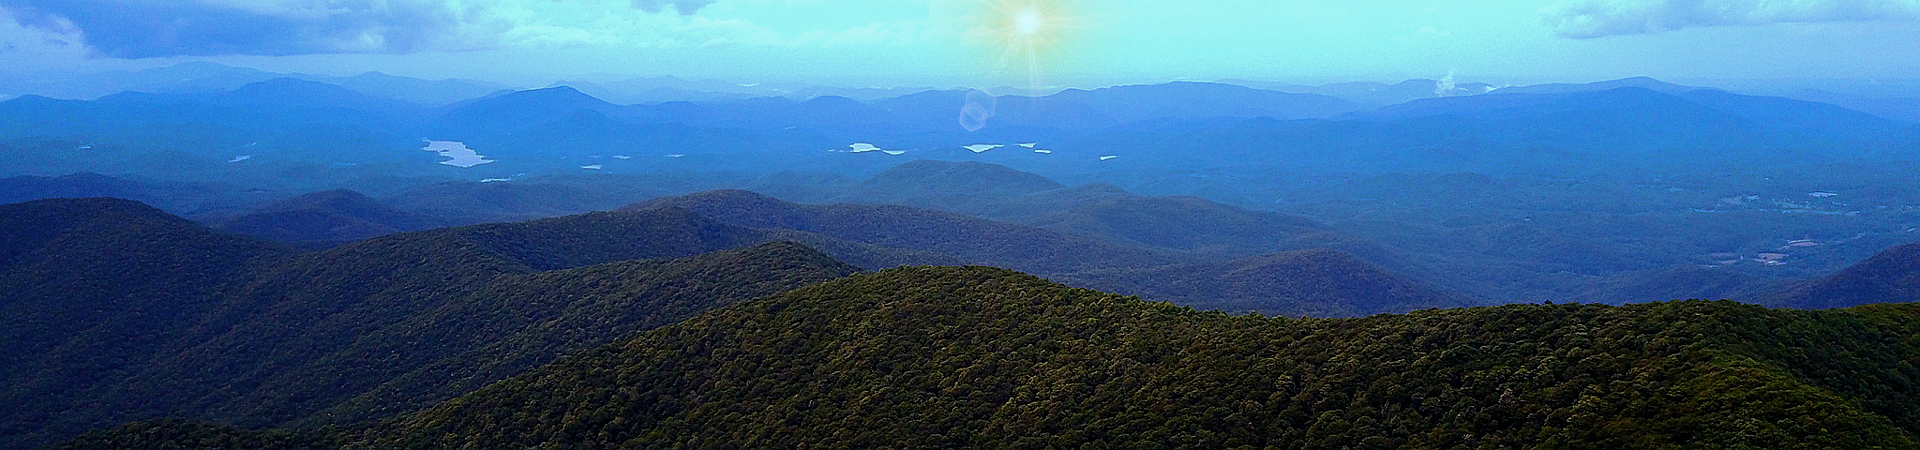 North Georgia Mountains